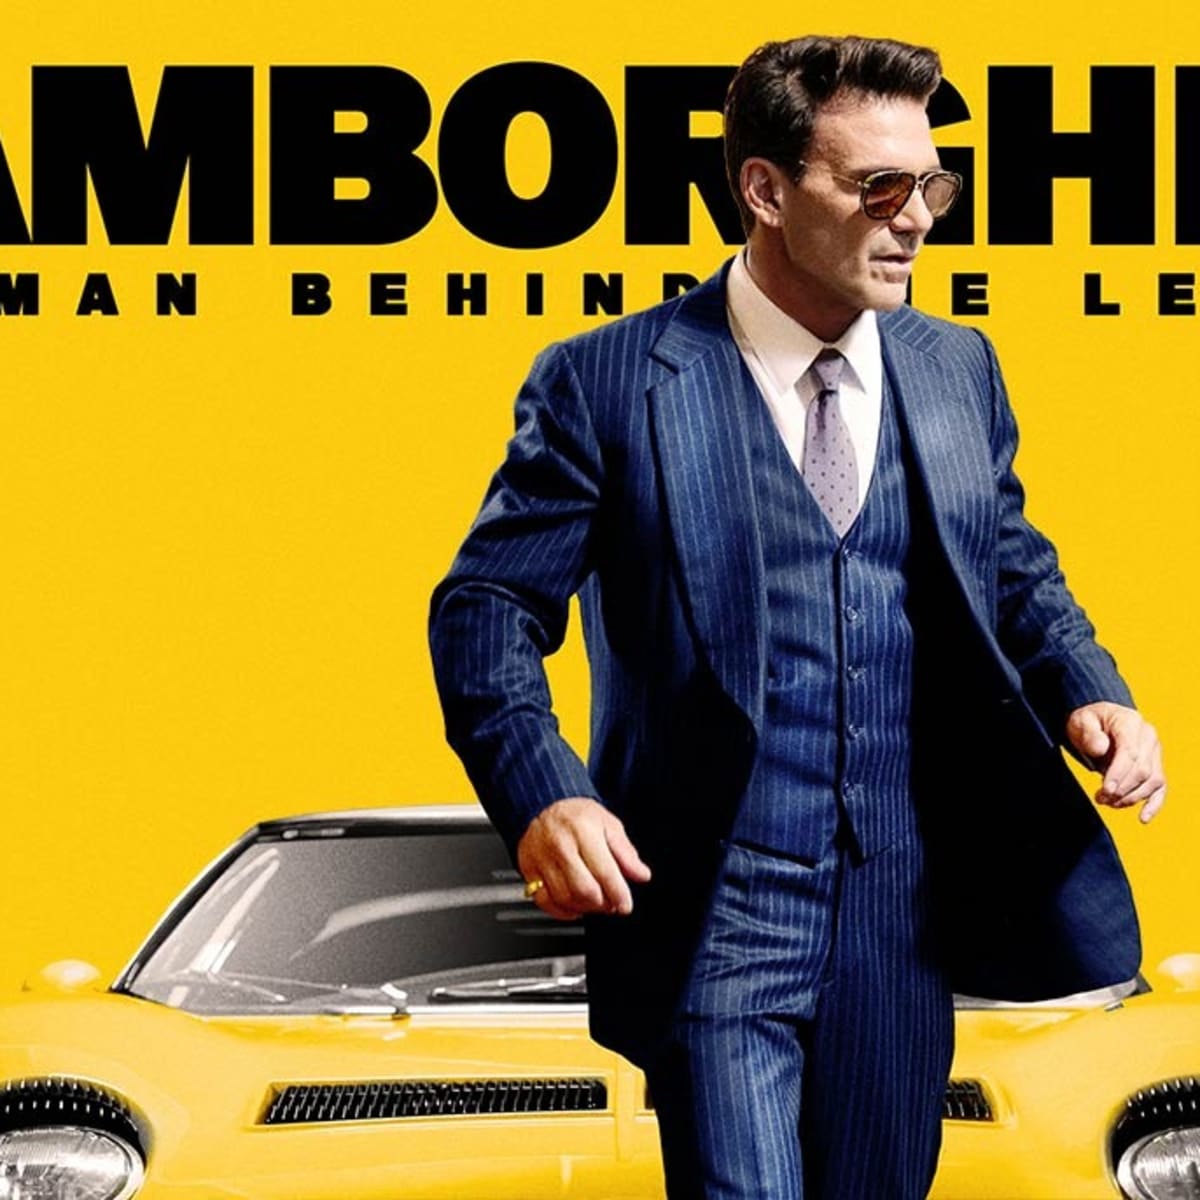 Lamborghini: The Man Behind The Legend (2022 Movie) Official Trailer -  Frank Grillo, Gabriel Byrne 